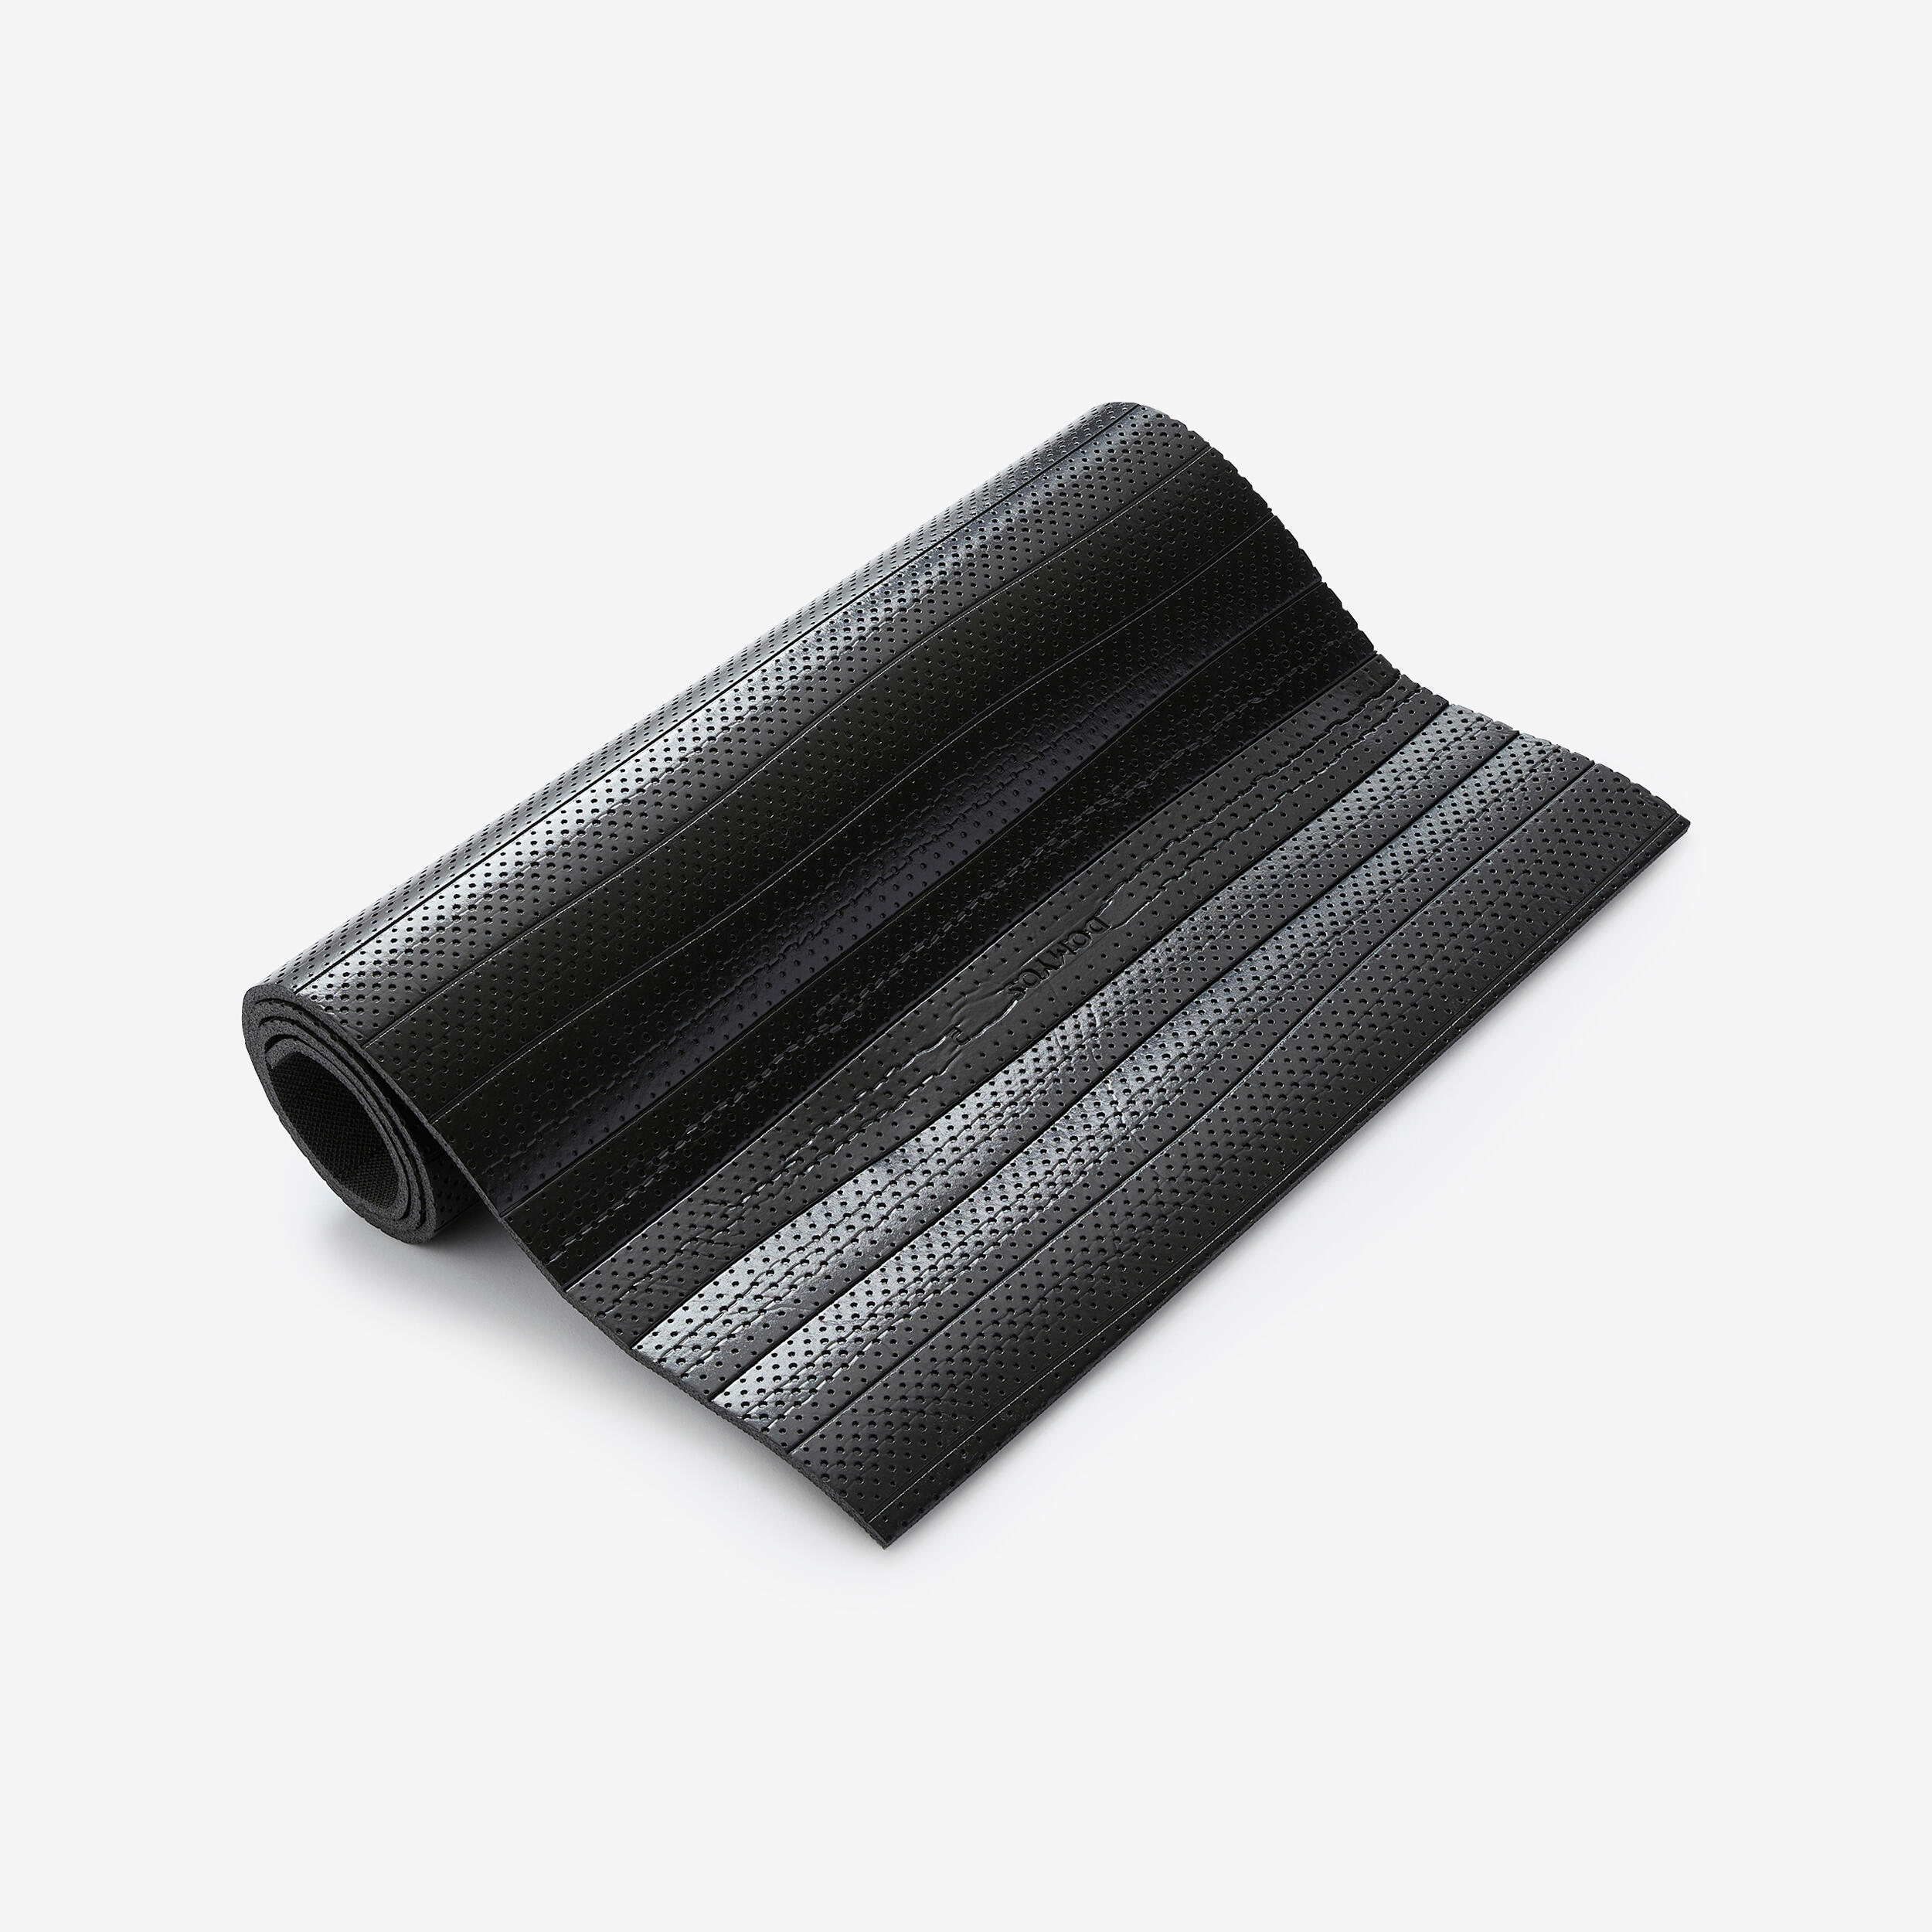 140 cm x 50 cm x 7 mm Durable Fitness Floor Mat 100 - Black 2/4